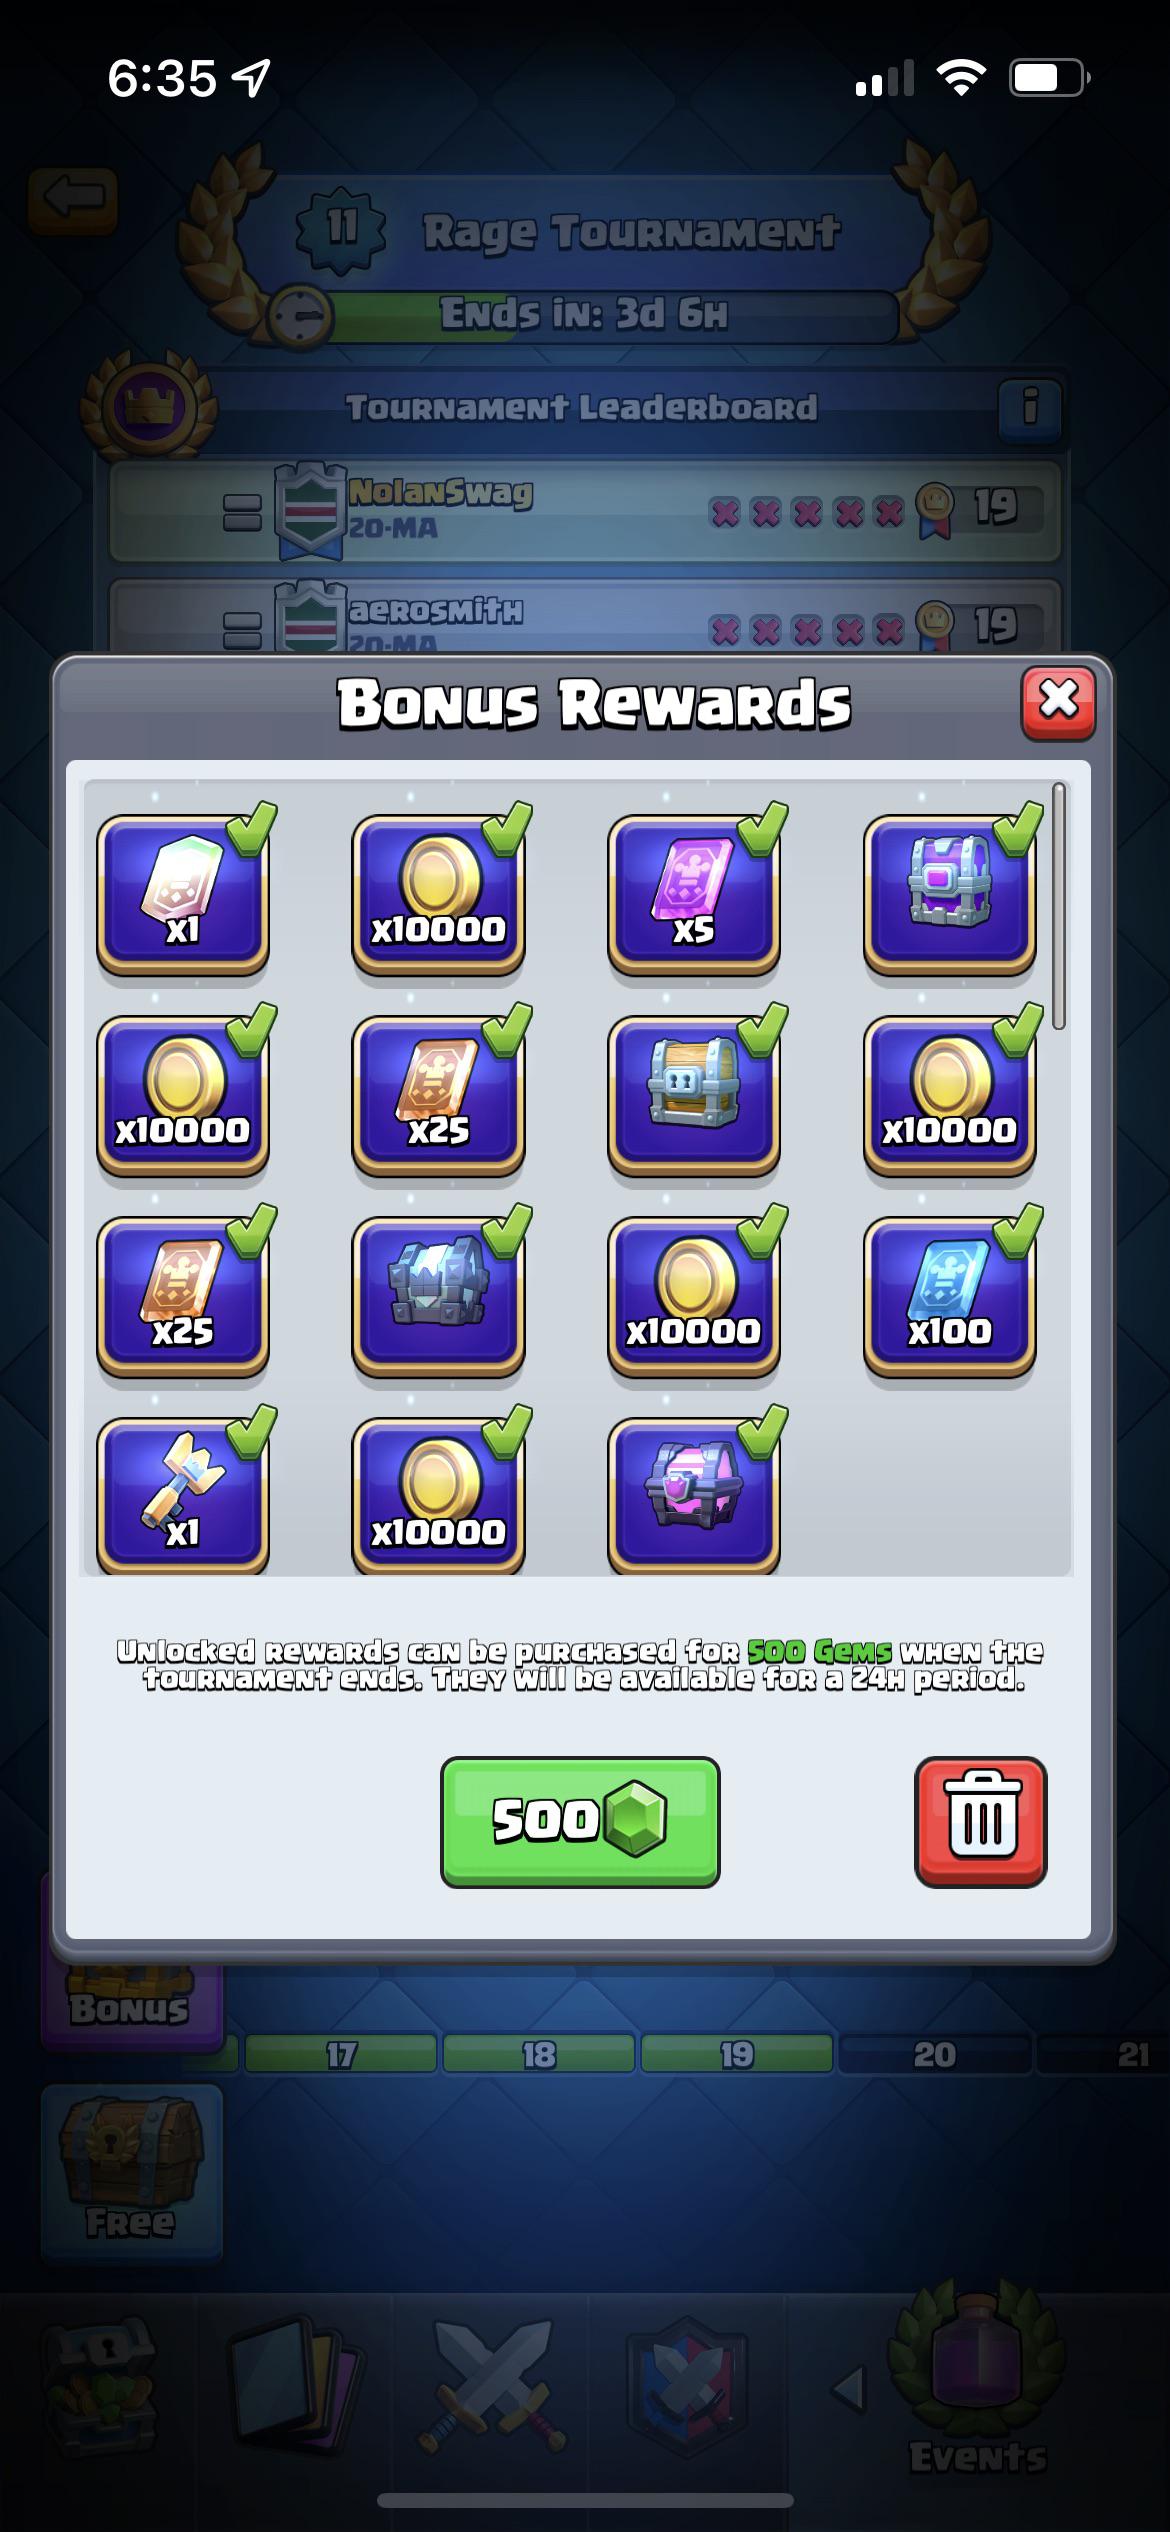 What is a leaderboard tournament bonus?